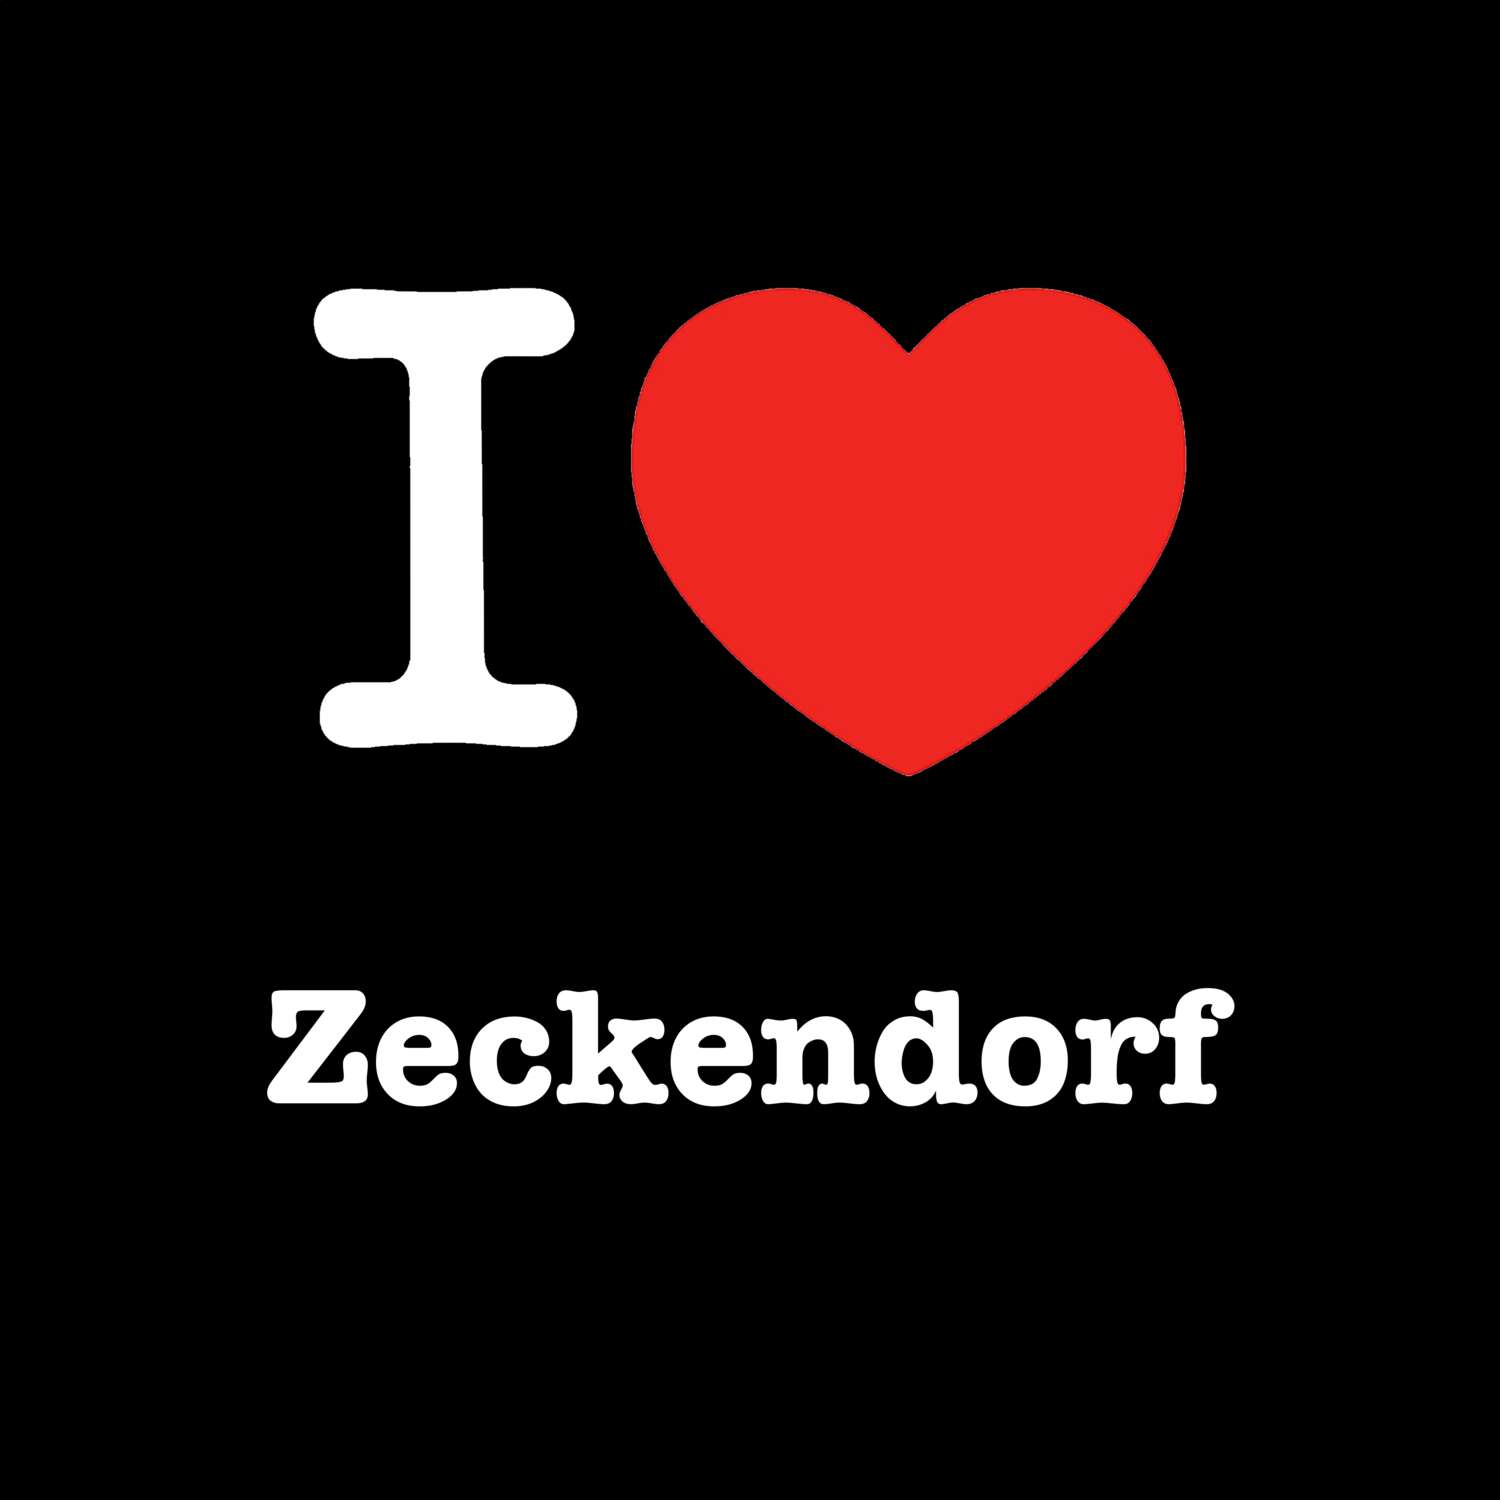 Zeckendorf T-Shirt »I love«